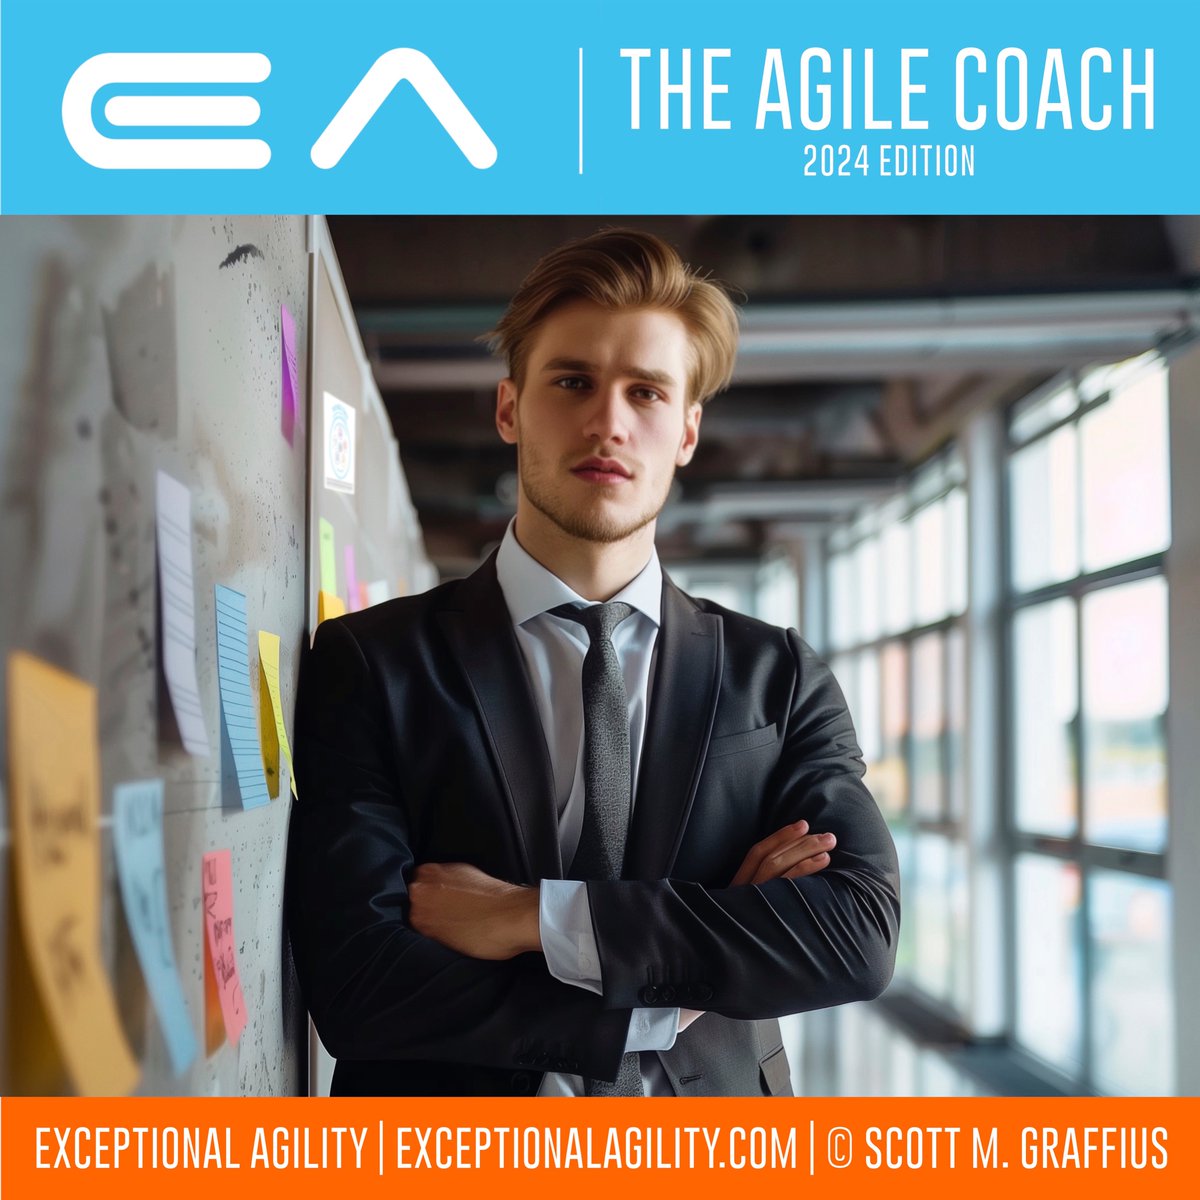 The Agile Coach: 2024 Edition

🔗 exceptionalagility.com/blog/files/the…

#Agile #Agility #AgileCoach #TheAgileCoach #AgileCoaches #AgileLeadership #ScrumMaster #AgileTransformation #ContinuousImprovement #AgileCommunity #AgileMindset #AgileTeam #AgileTraining #AgileCulture #ExceptionalAgility